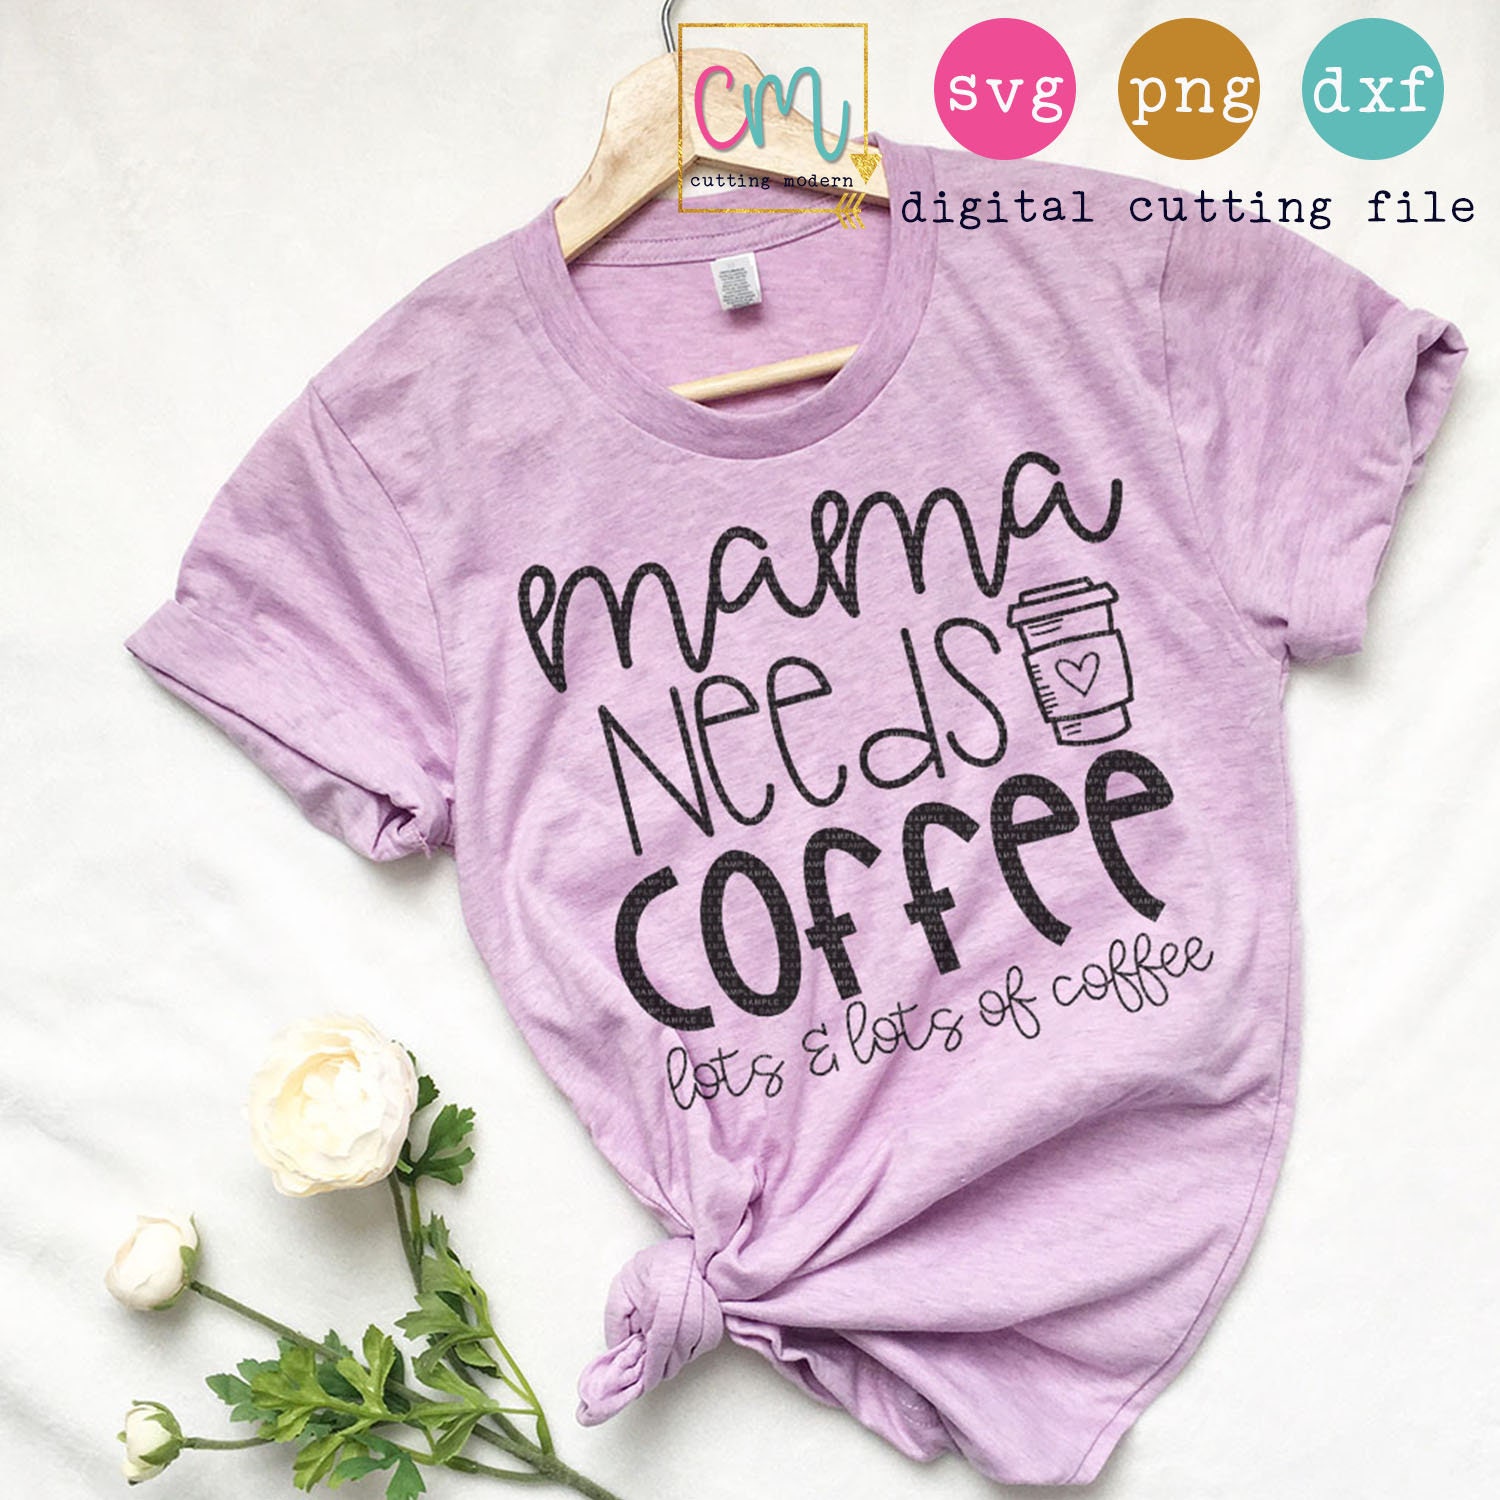 Mama Needs Coffee – Bella Cotton Apparel